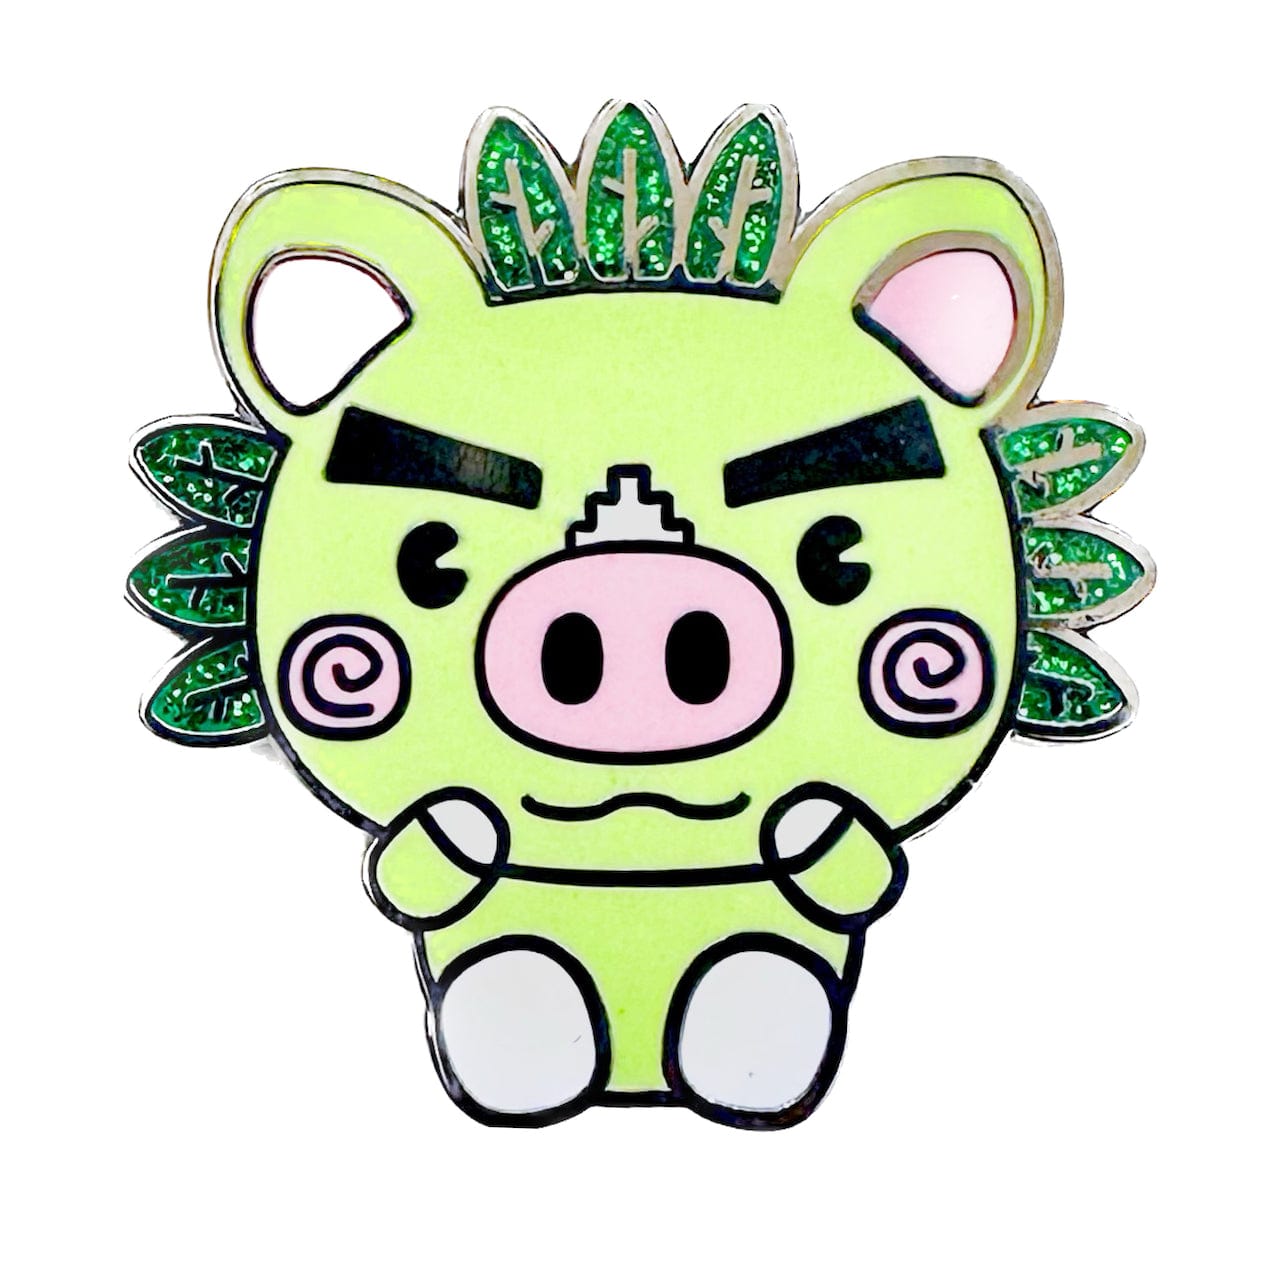 Pinbuds Enamel pin Grumpy hungry pig pin - Greboo from kagoshima prefecture(Japan Mascot collection)